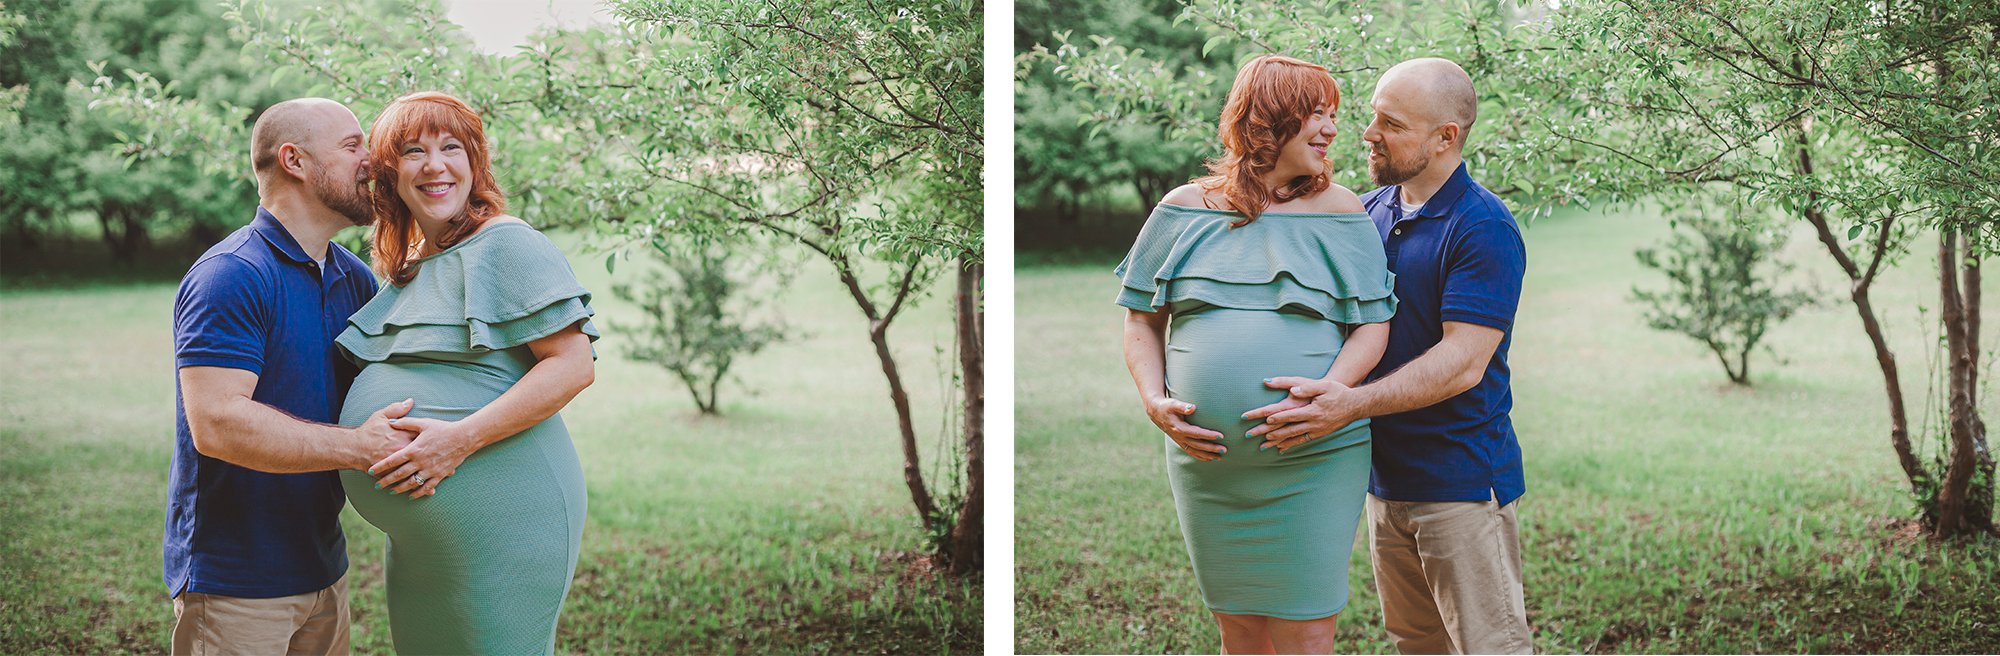 Newburyport Maternity Portraits | Stephen Grant Photography